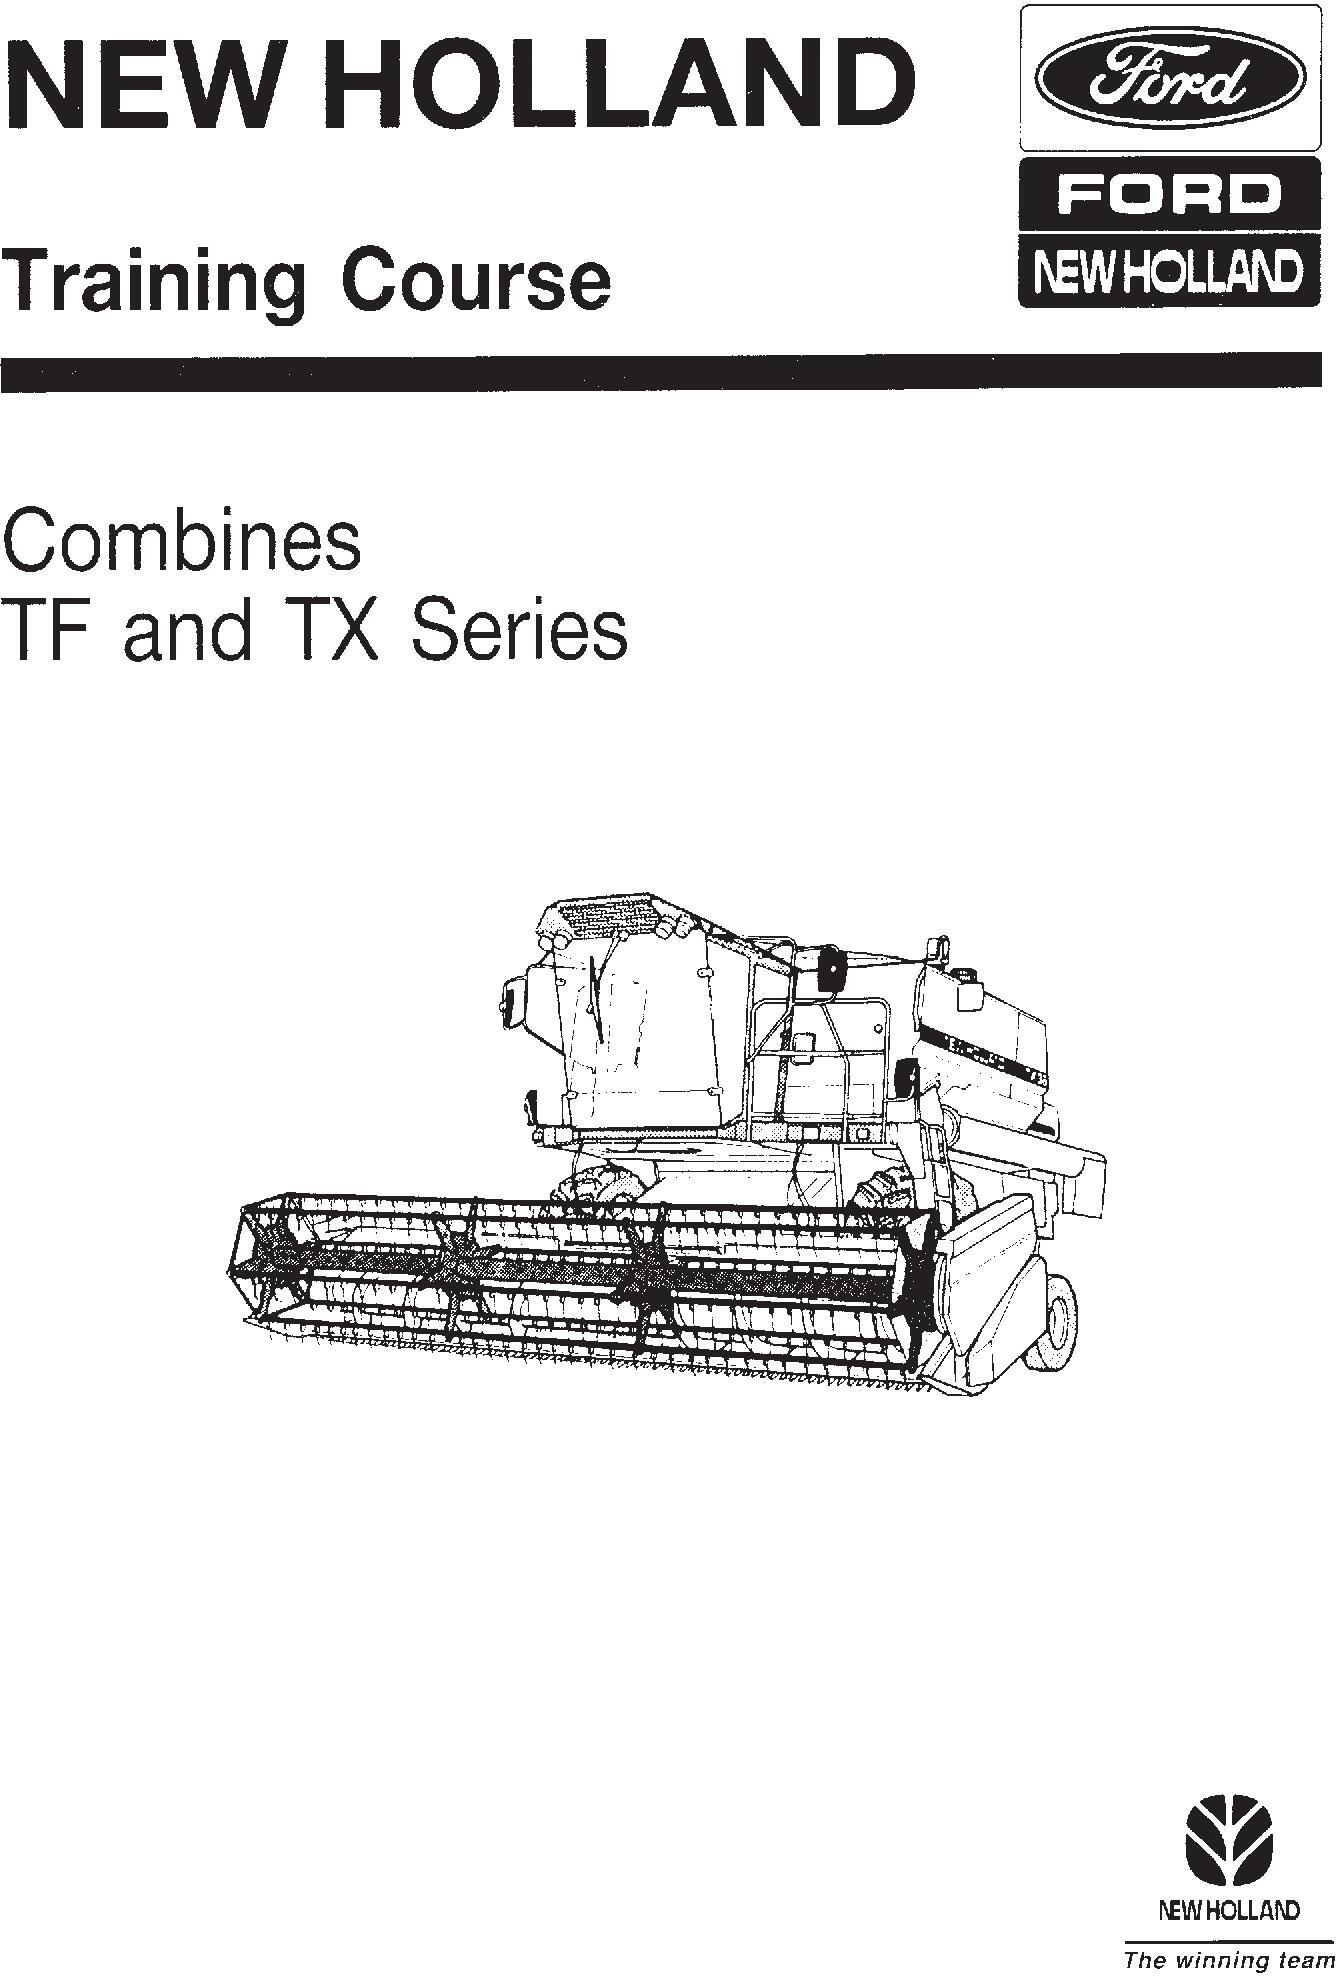 New Holland TF42, TF44, TF46, TX34 Combines Training manual - 19777